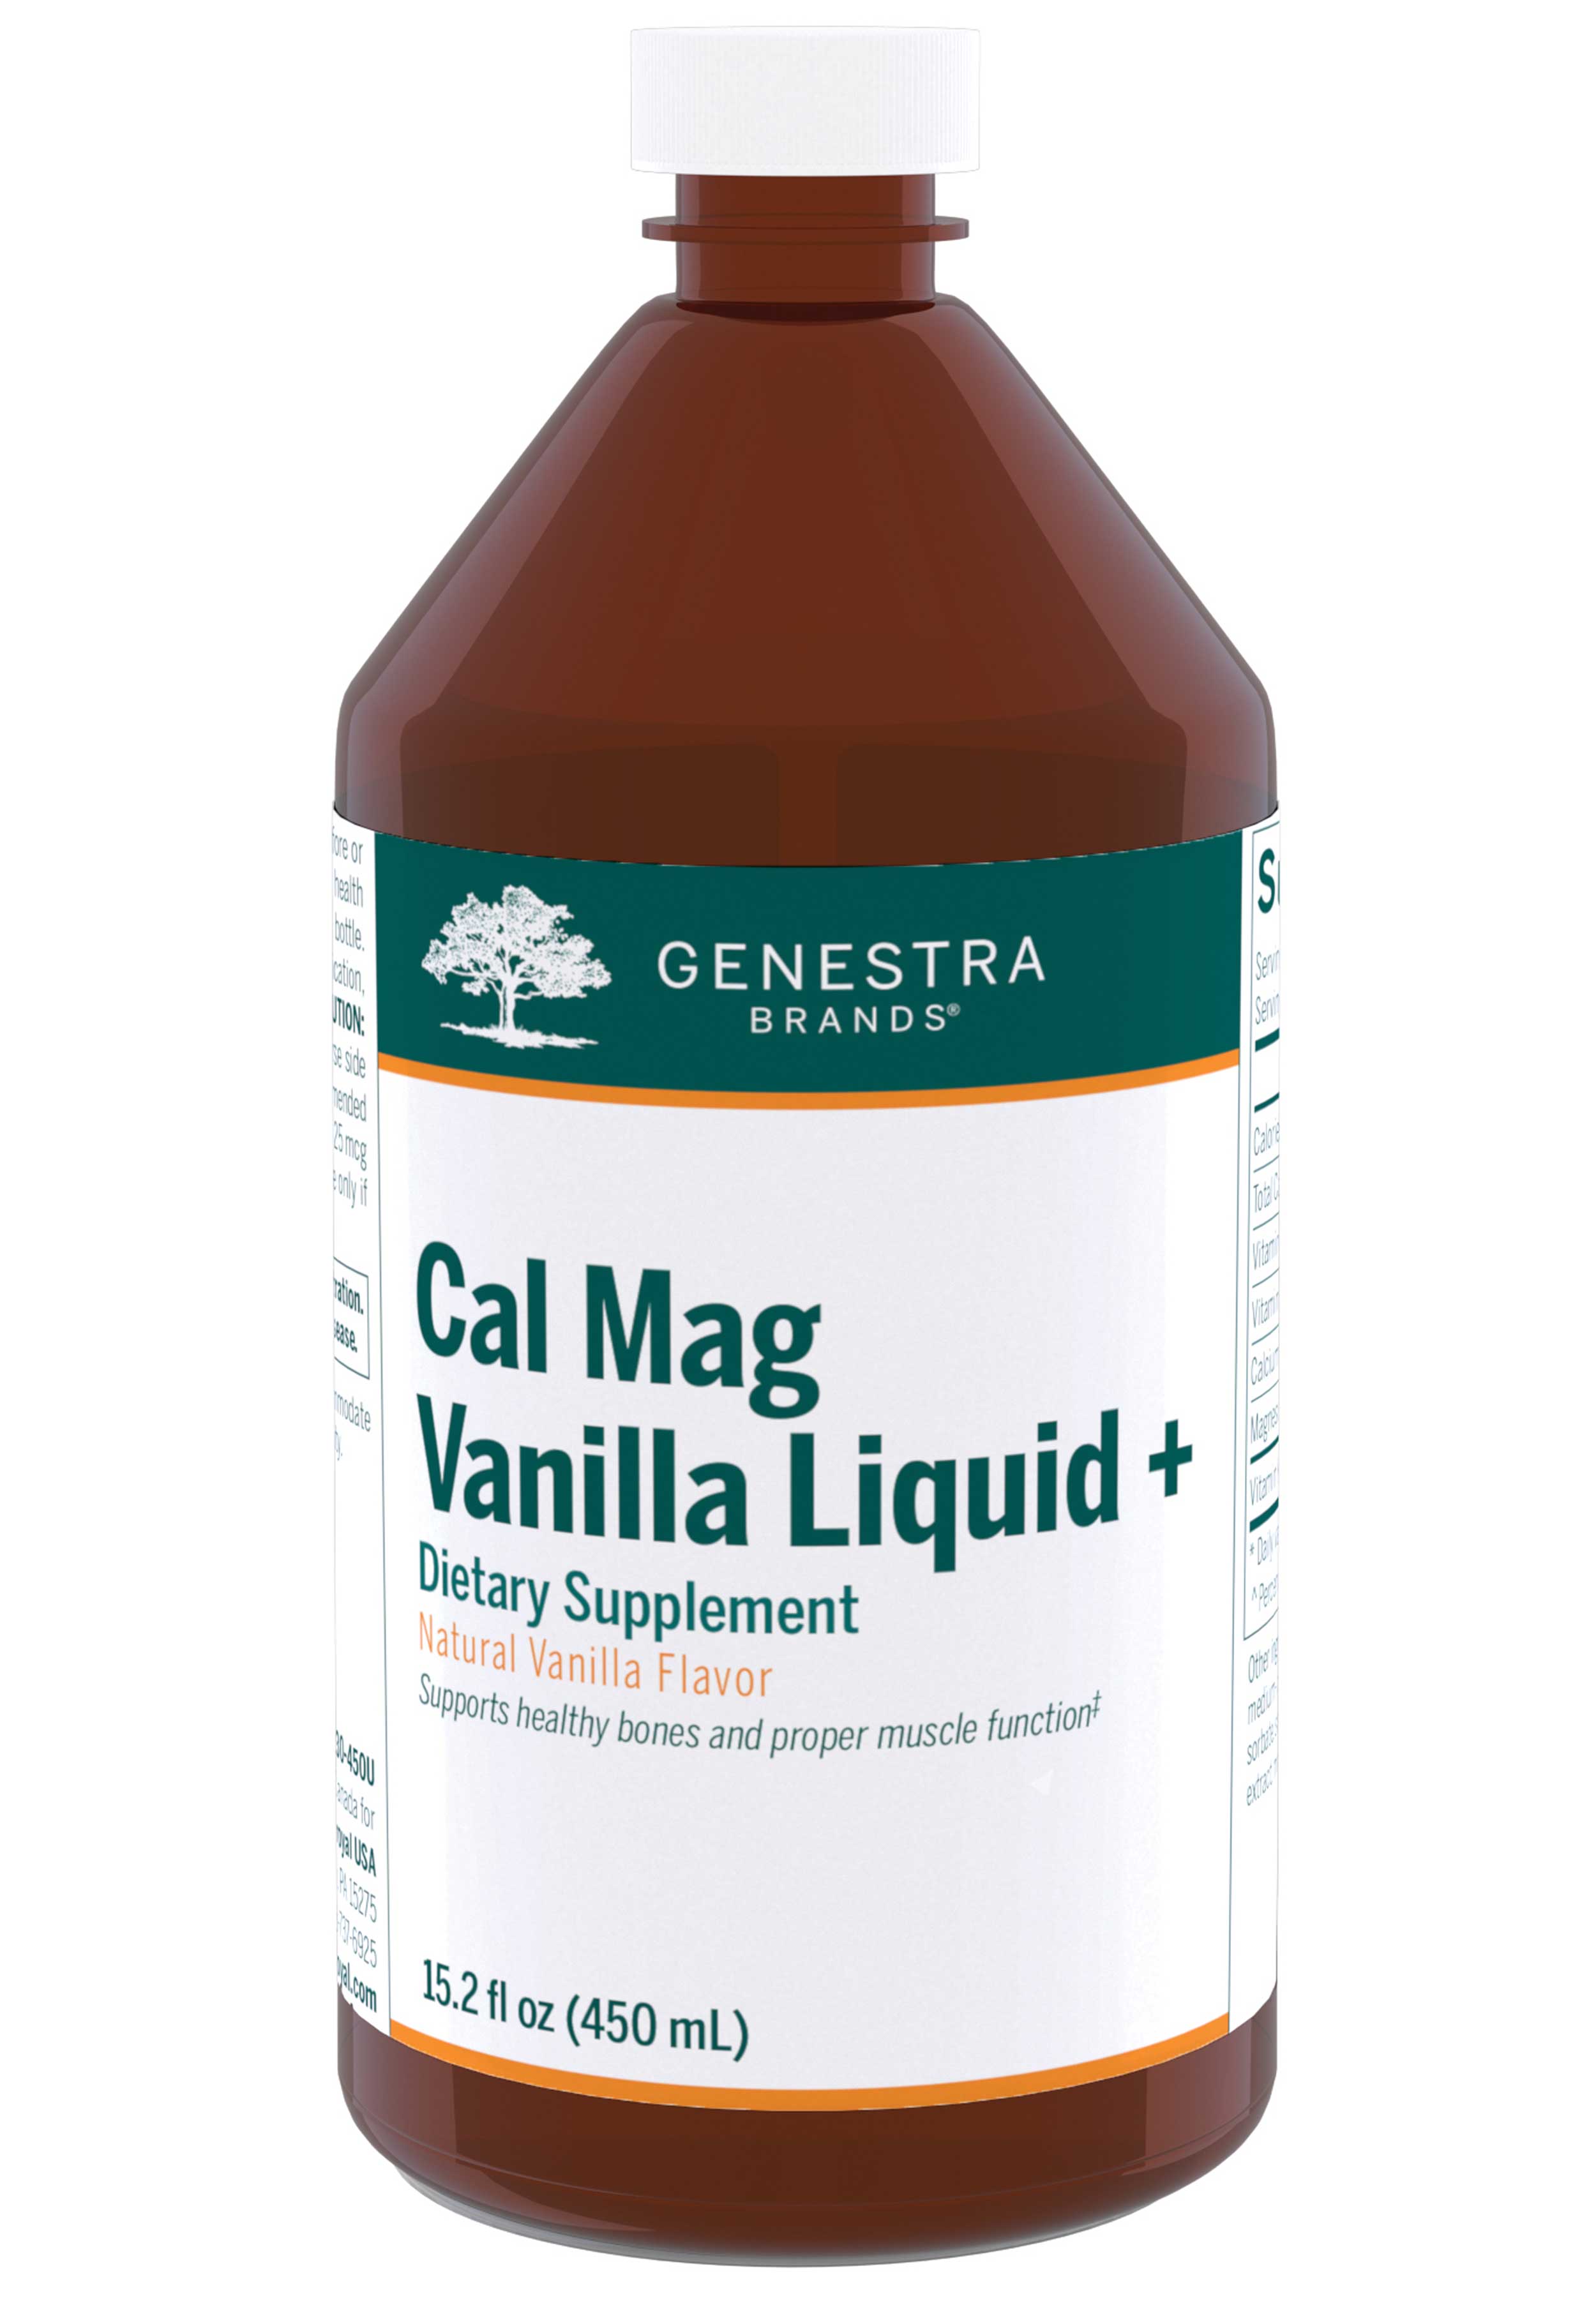 Genestra Brands Cal Mag Vanilla Liquid +